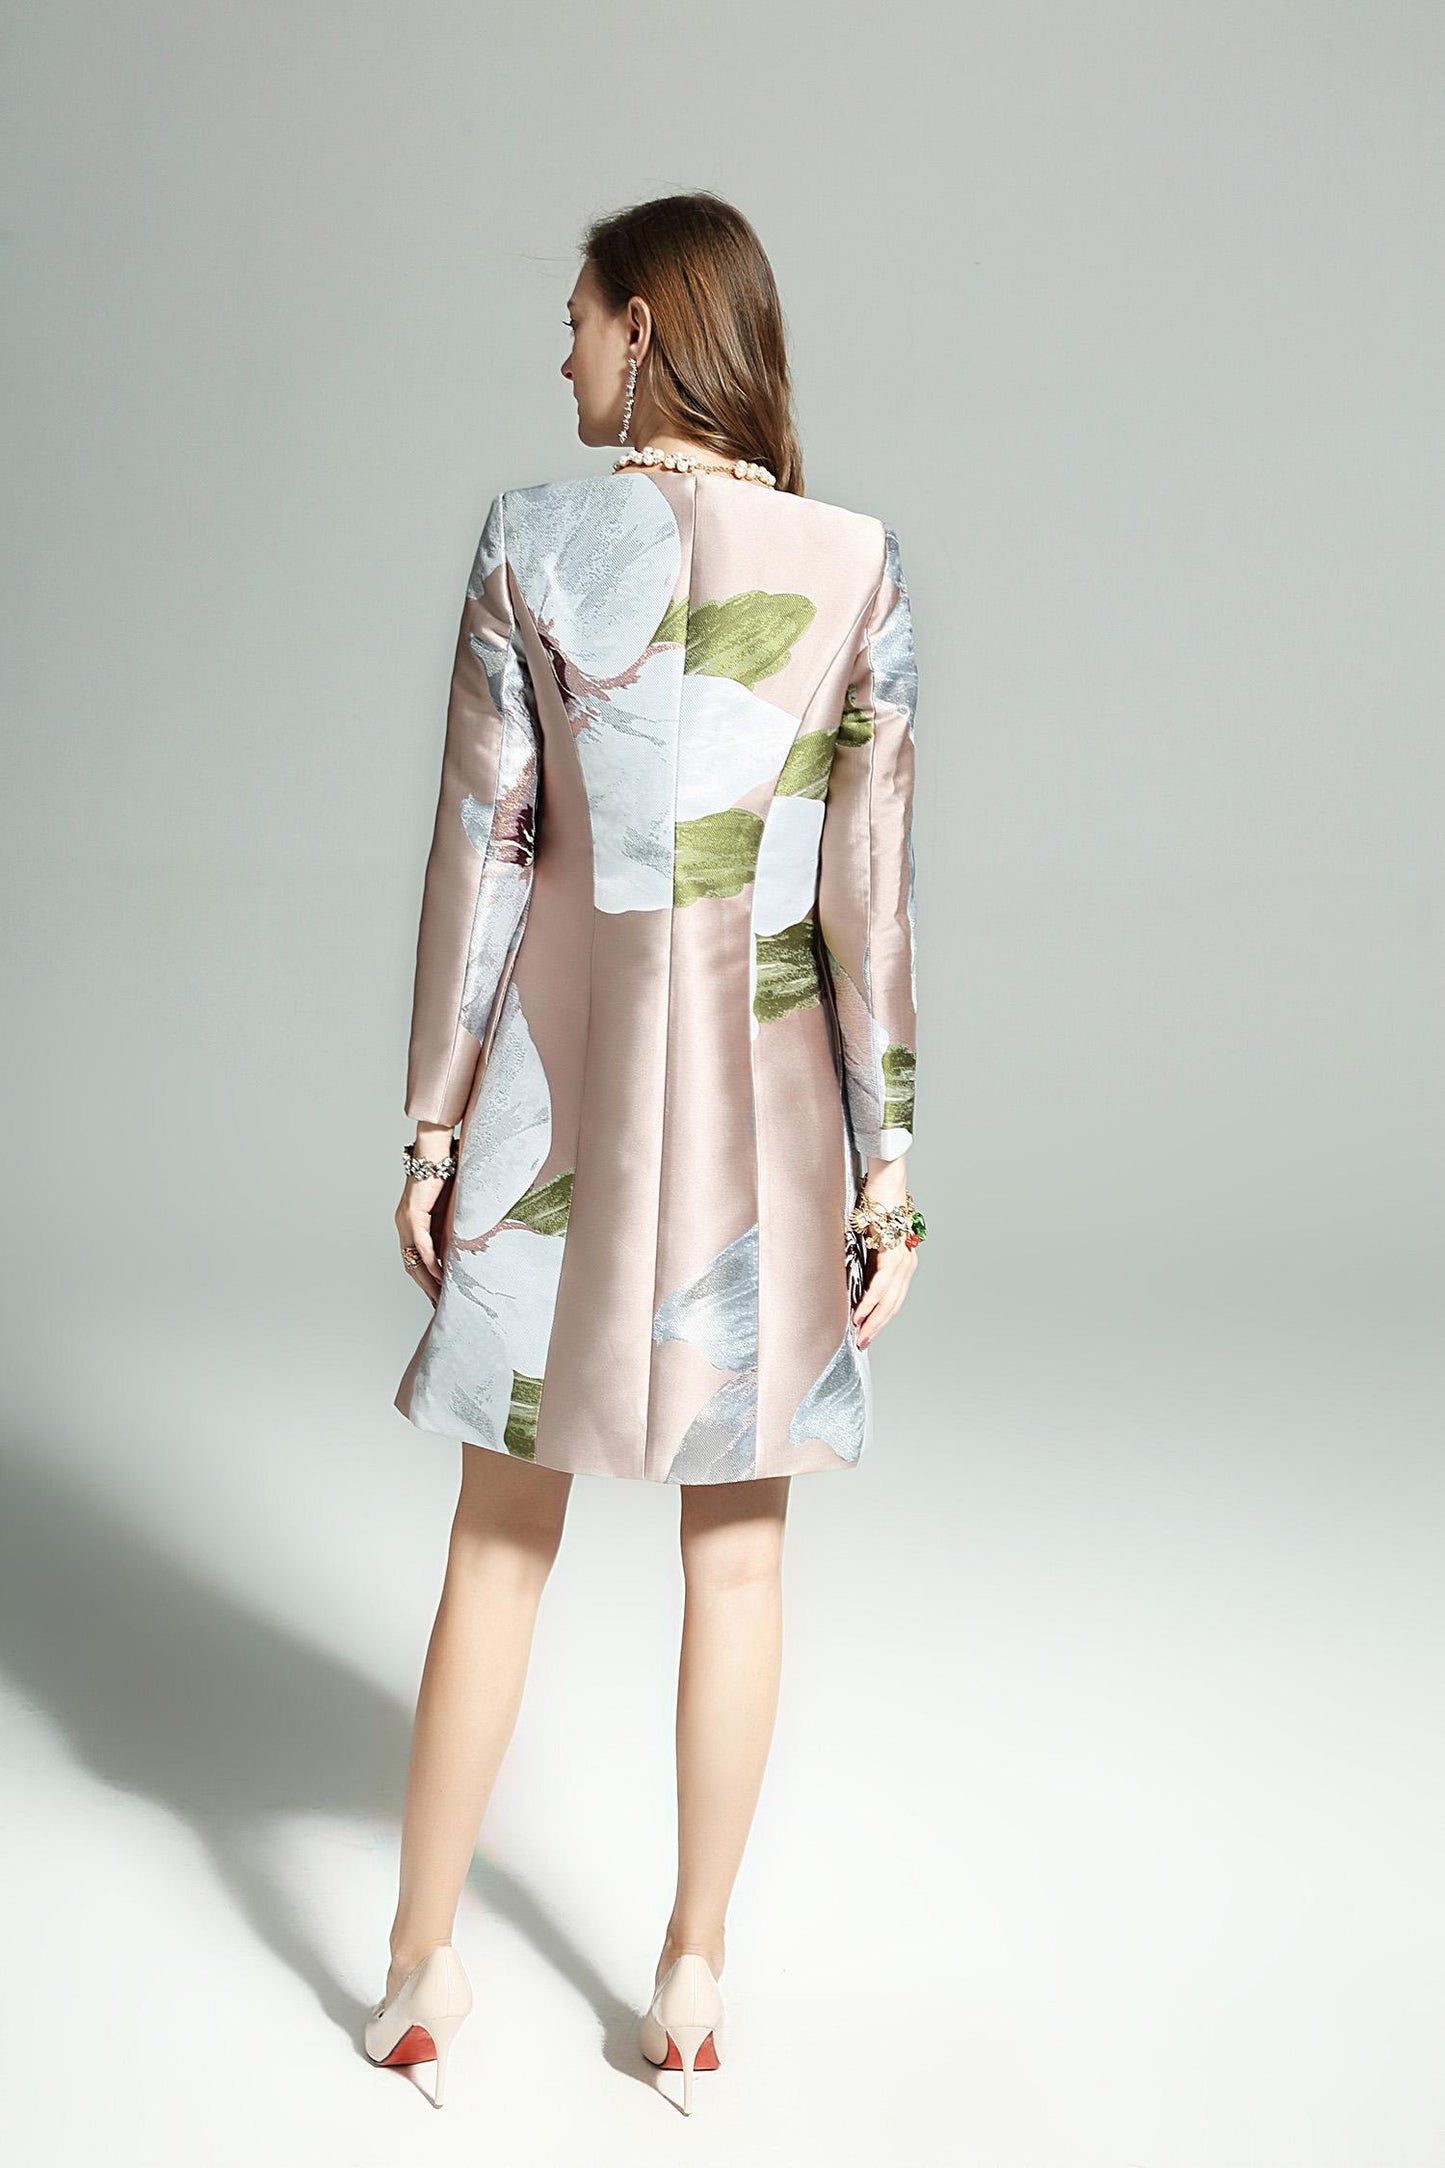 Limited Edition New Luxury Jacquard Print dress - Lane Dress